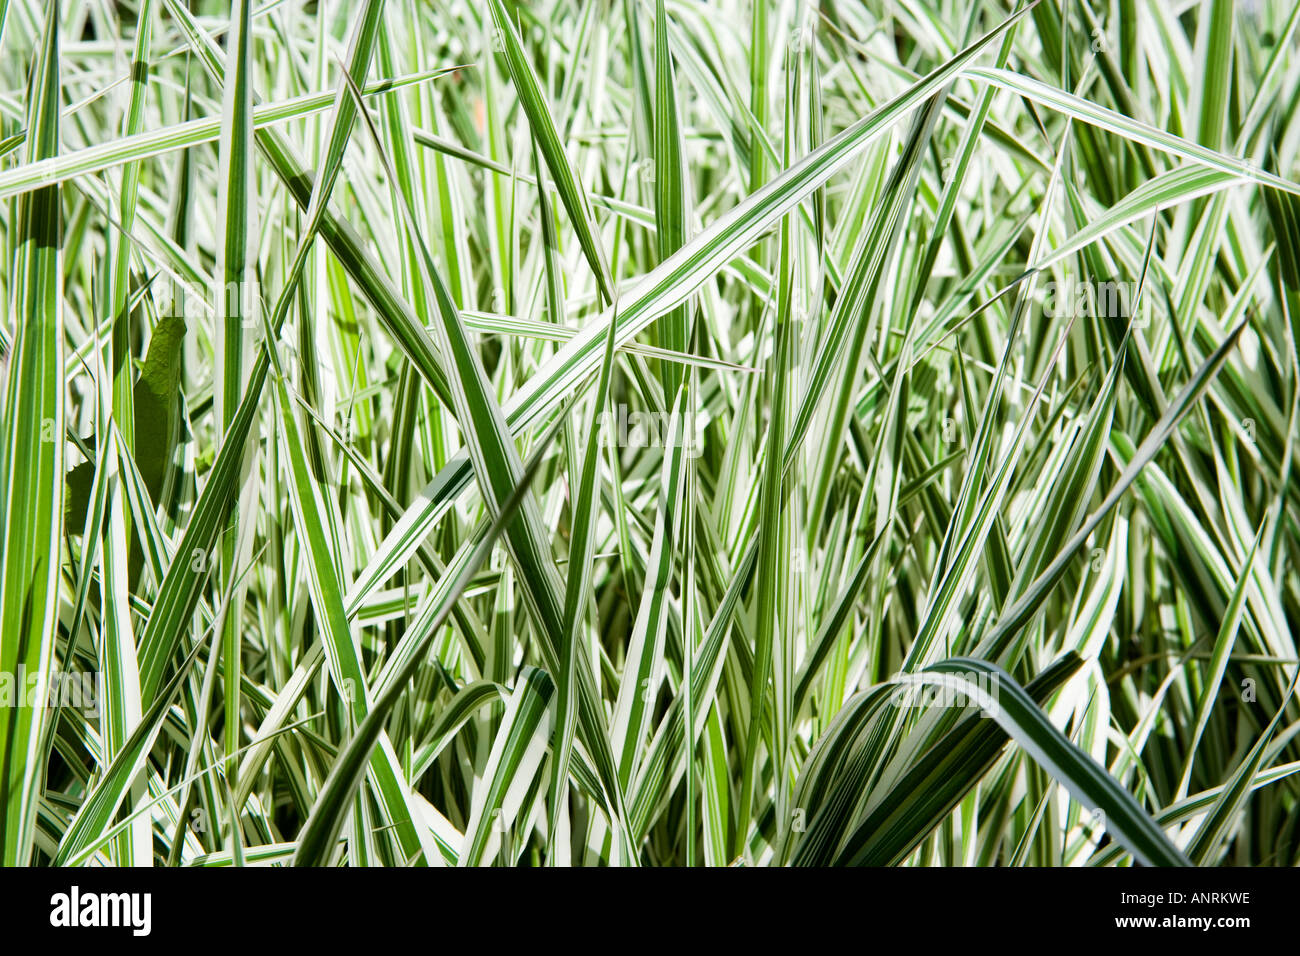 COMMON NAME: Grasses - varigated Stock Photo